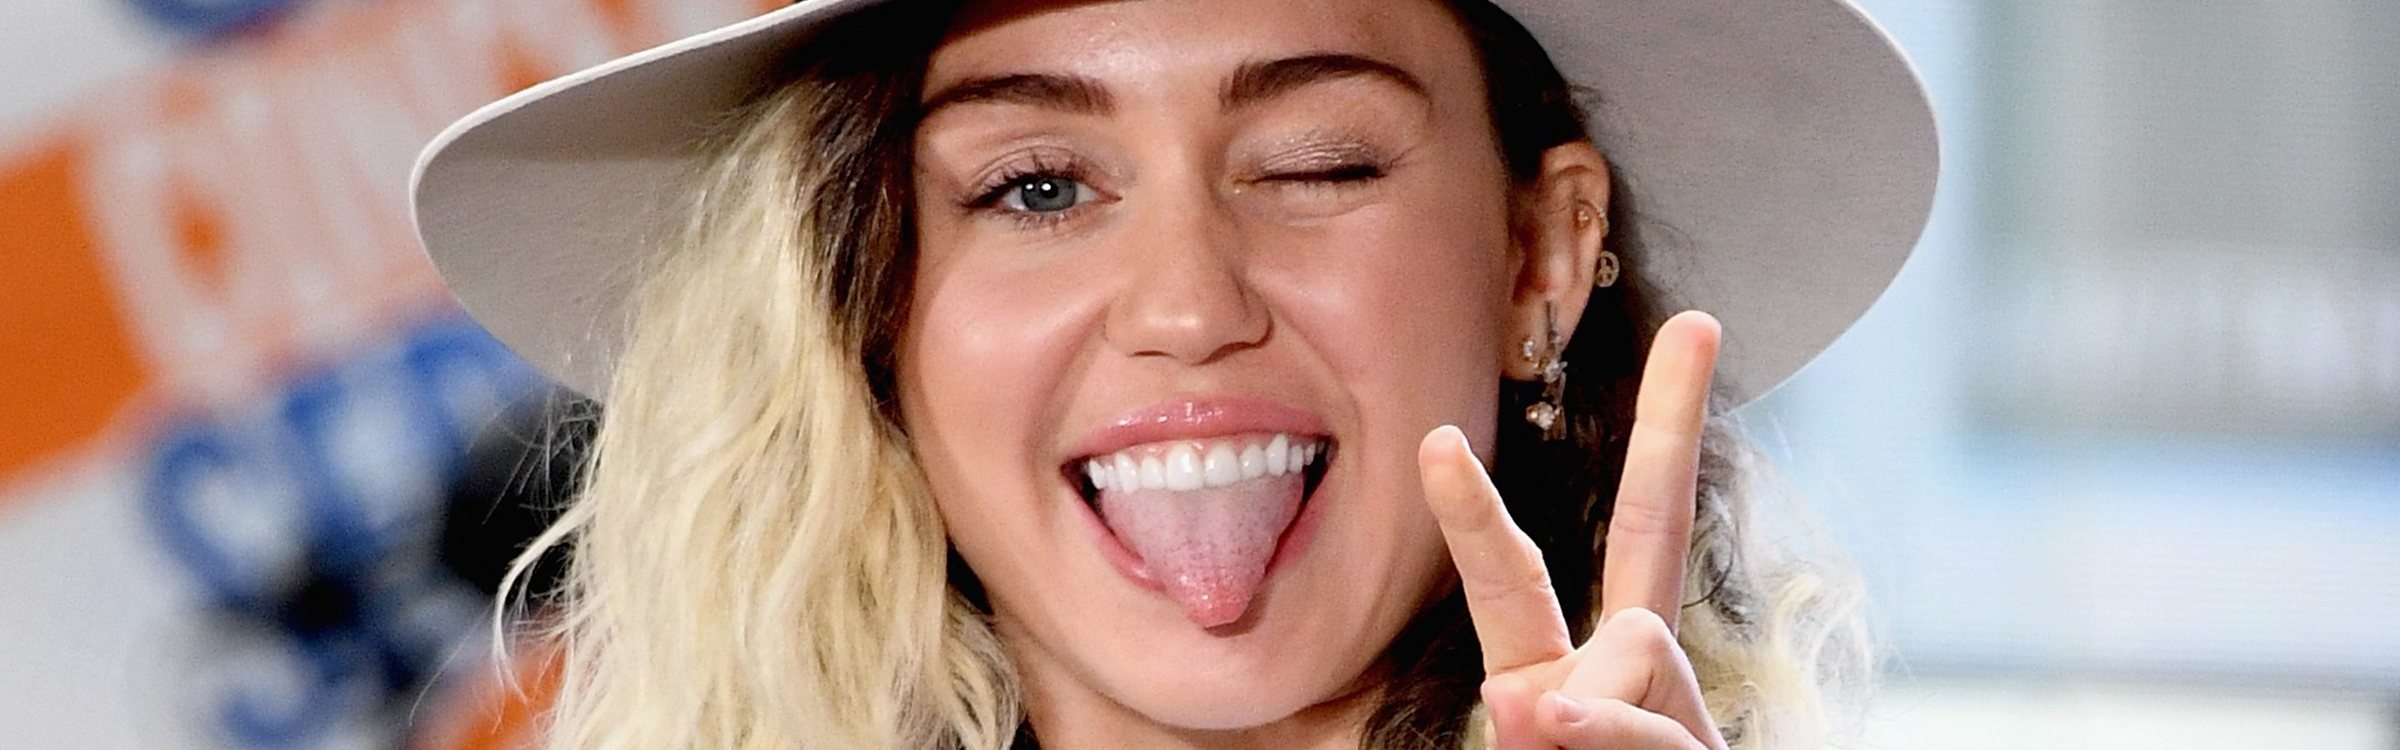 Mileyh